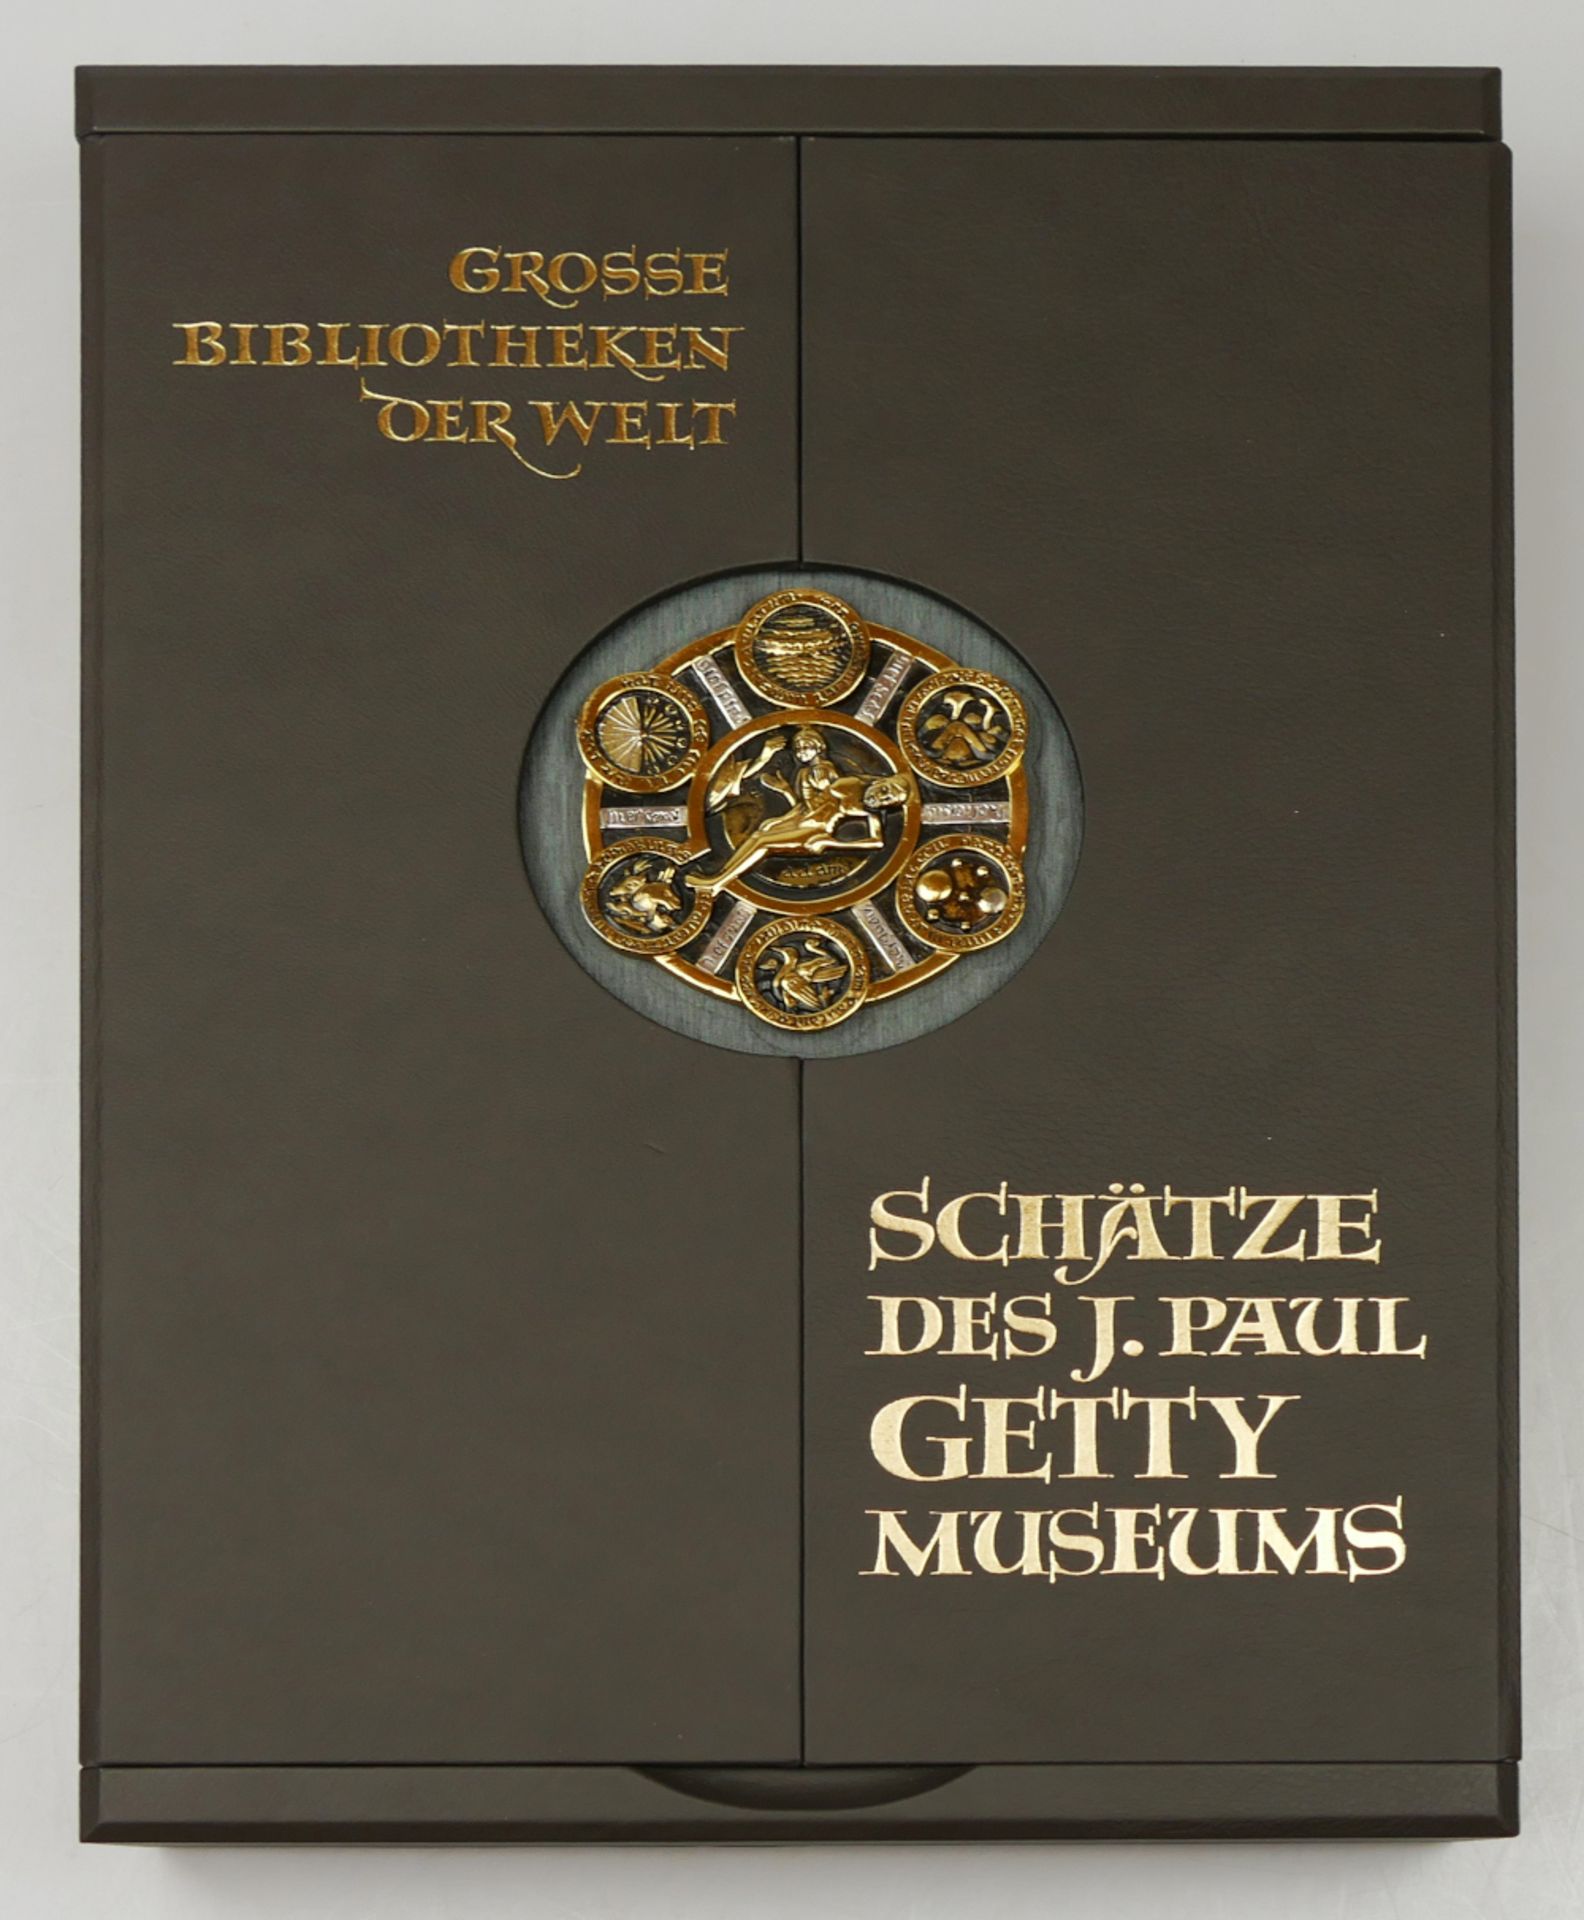 1 Faksimile "Schätze des J. Paul GETTY Museums" aus der Serie "Große Bibliotheken der Welt", Exempla